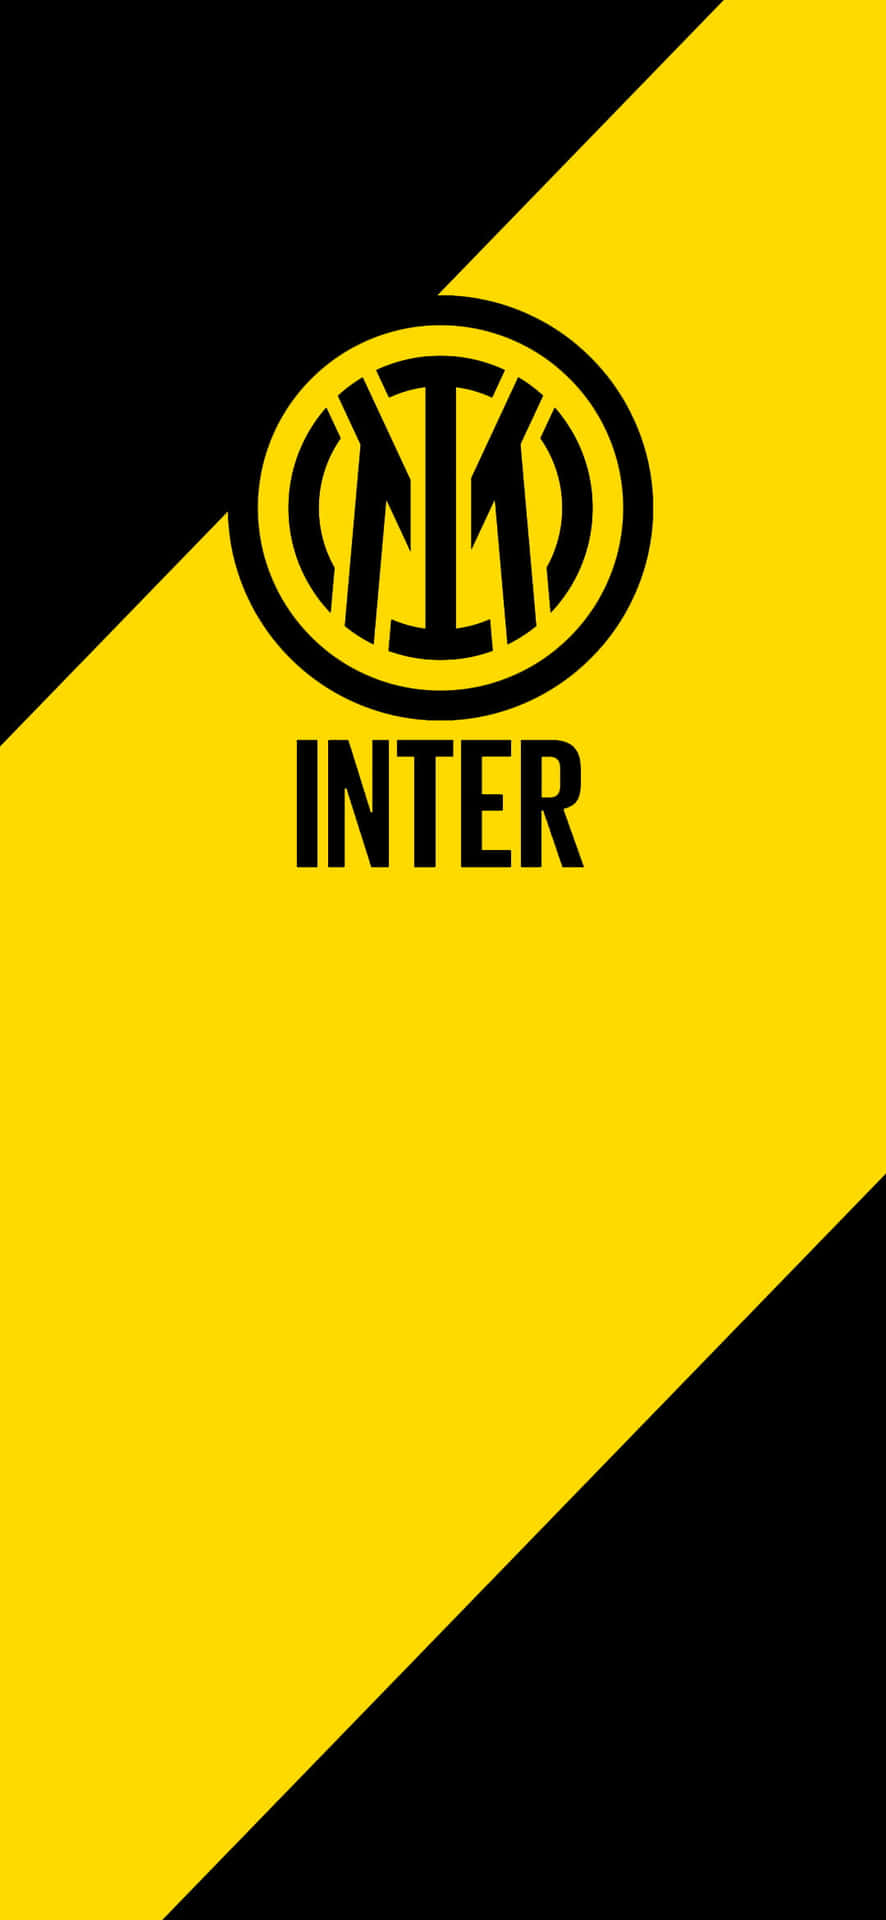 Intermilan Is A Professional Football Club Based In Milan, Italy. Fondo de pantalla